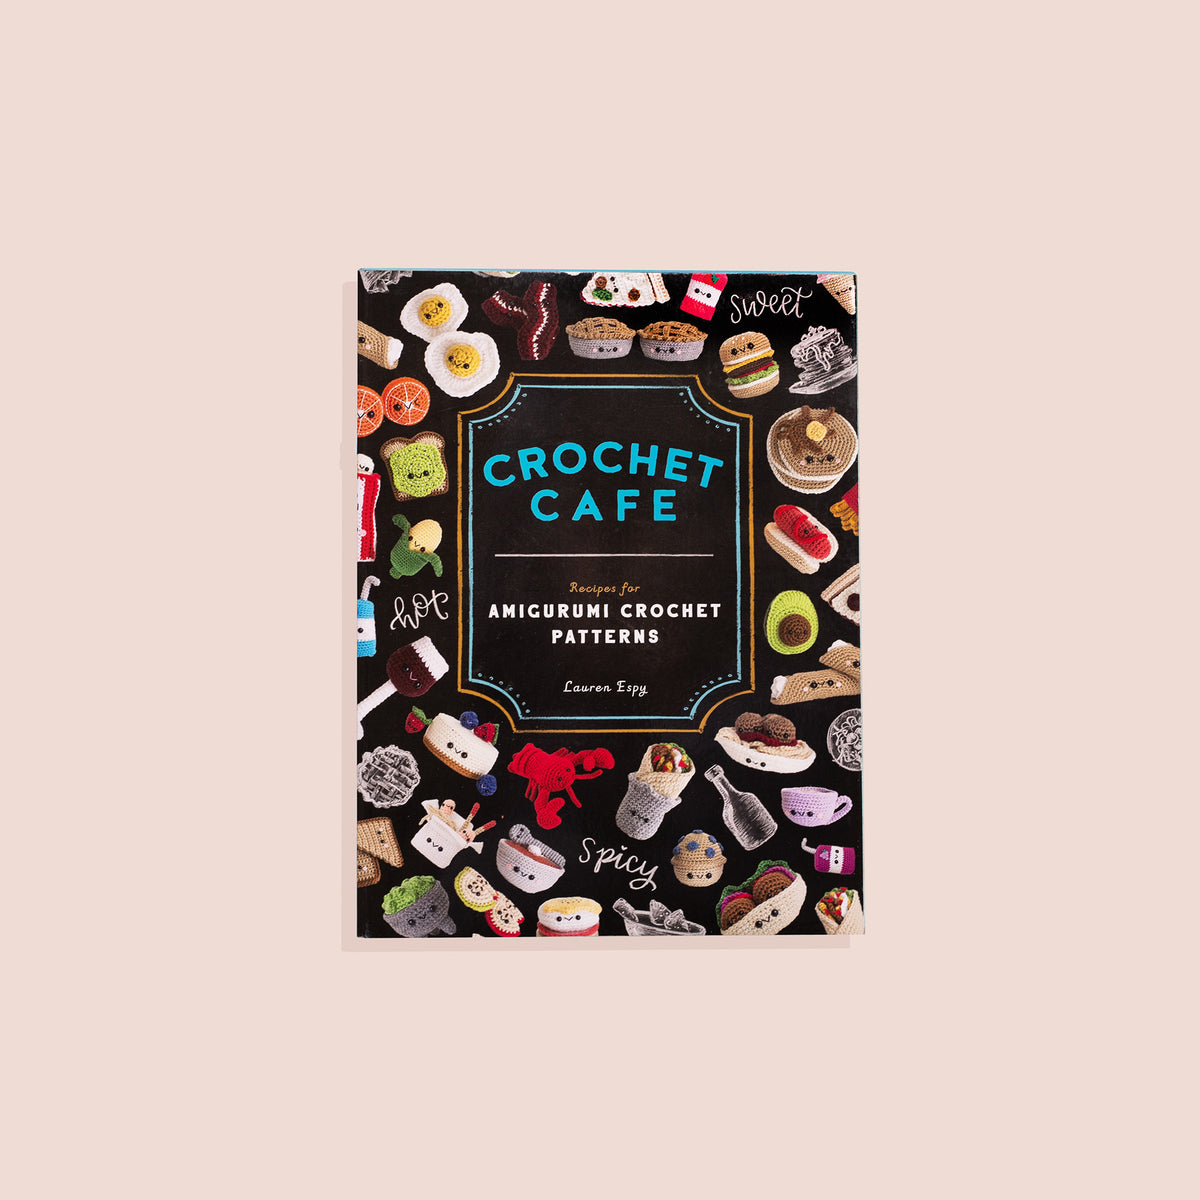 Crochet Cafe by Lauren Espy - Crochet Book Review 